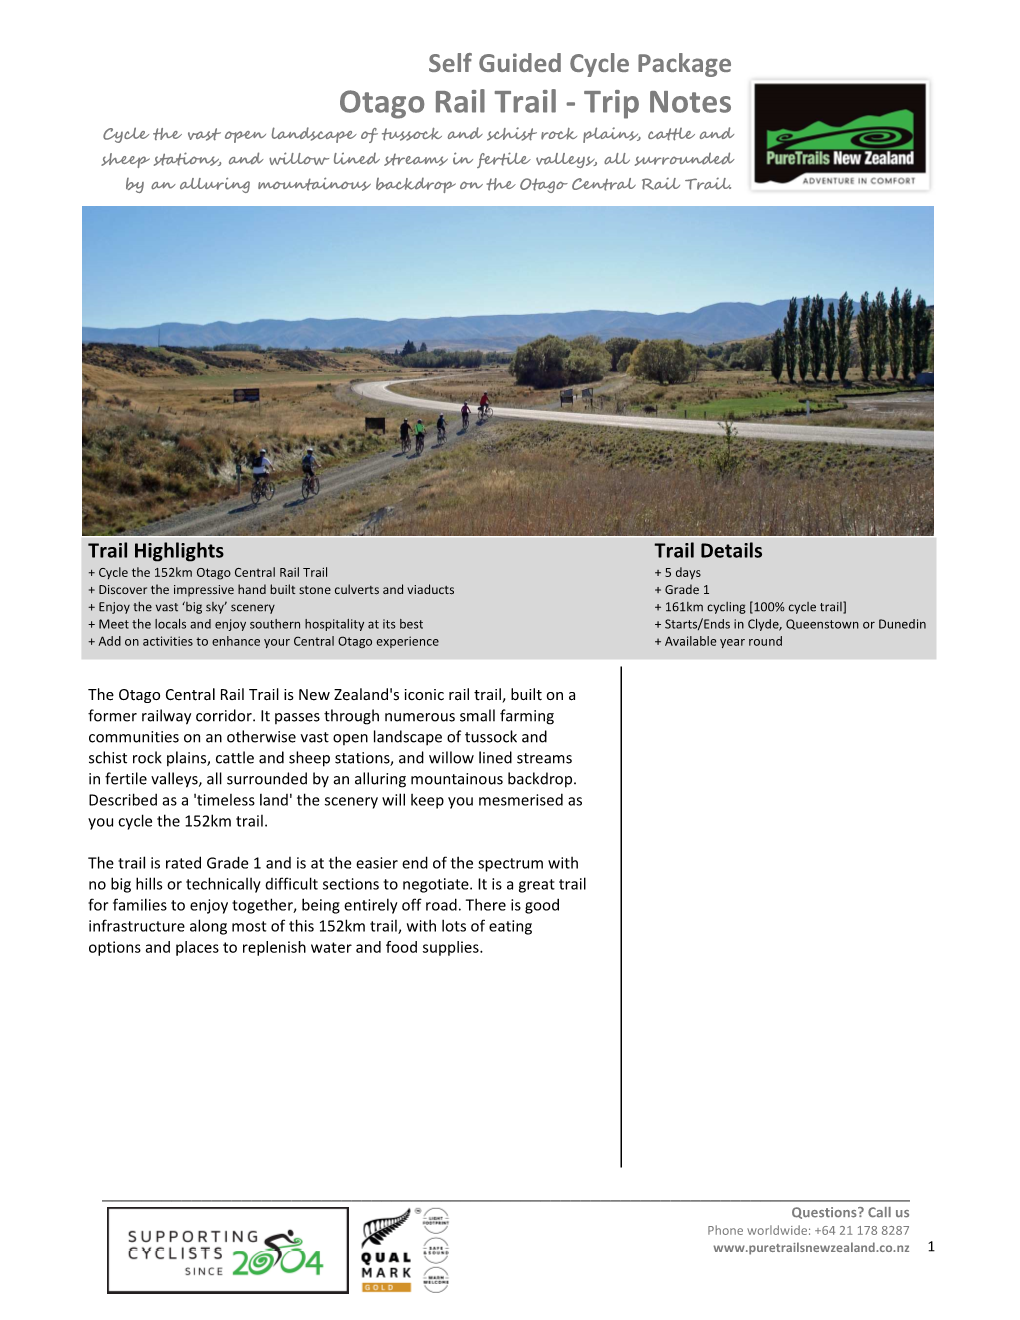 SGP-Otago Rail Trail-Tripnotes